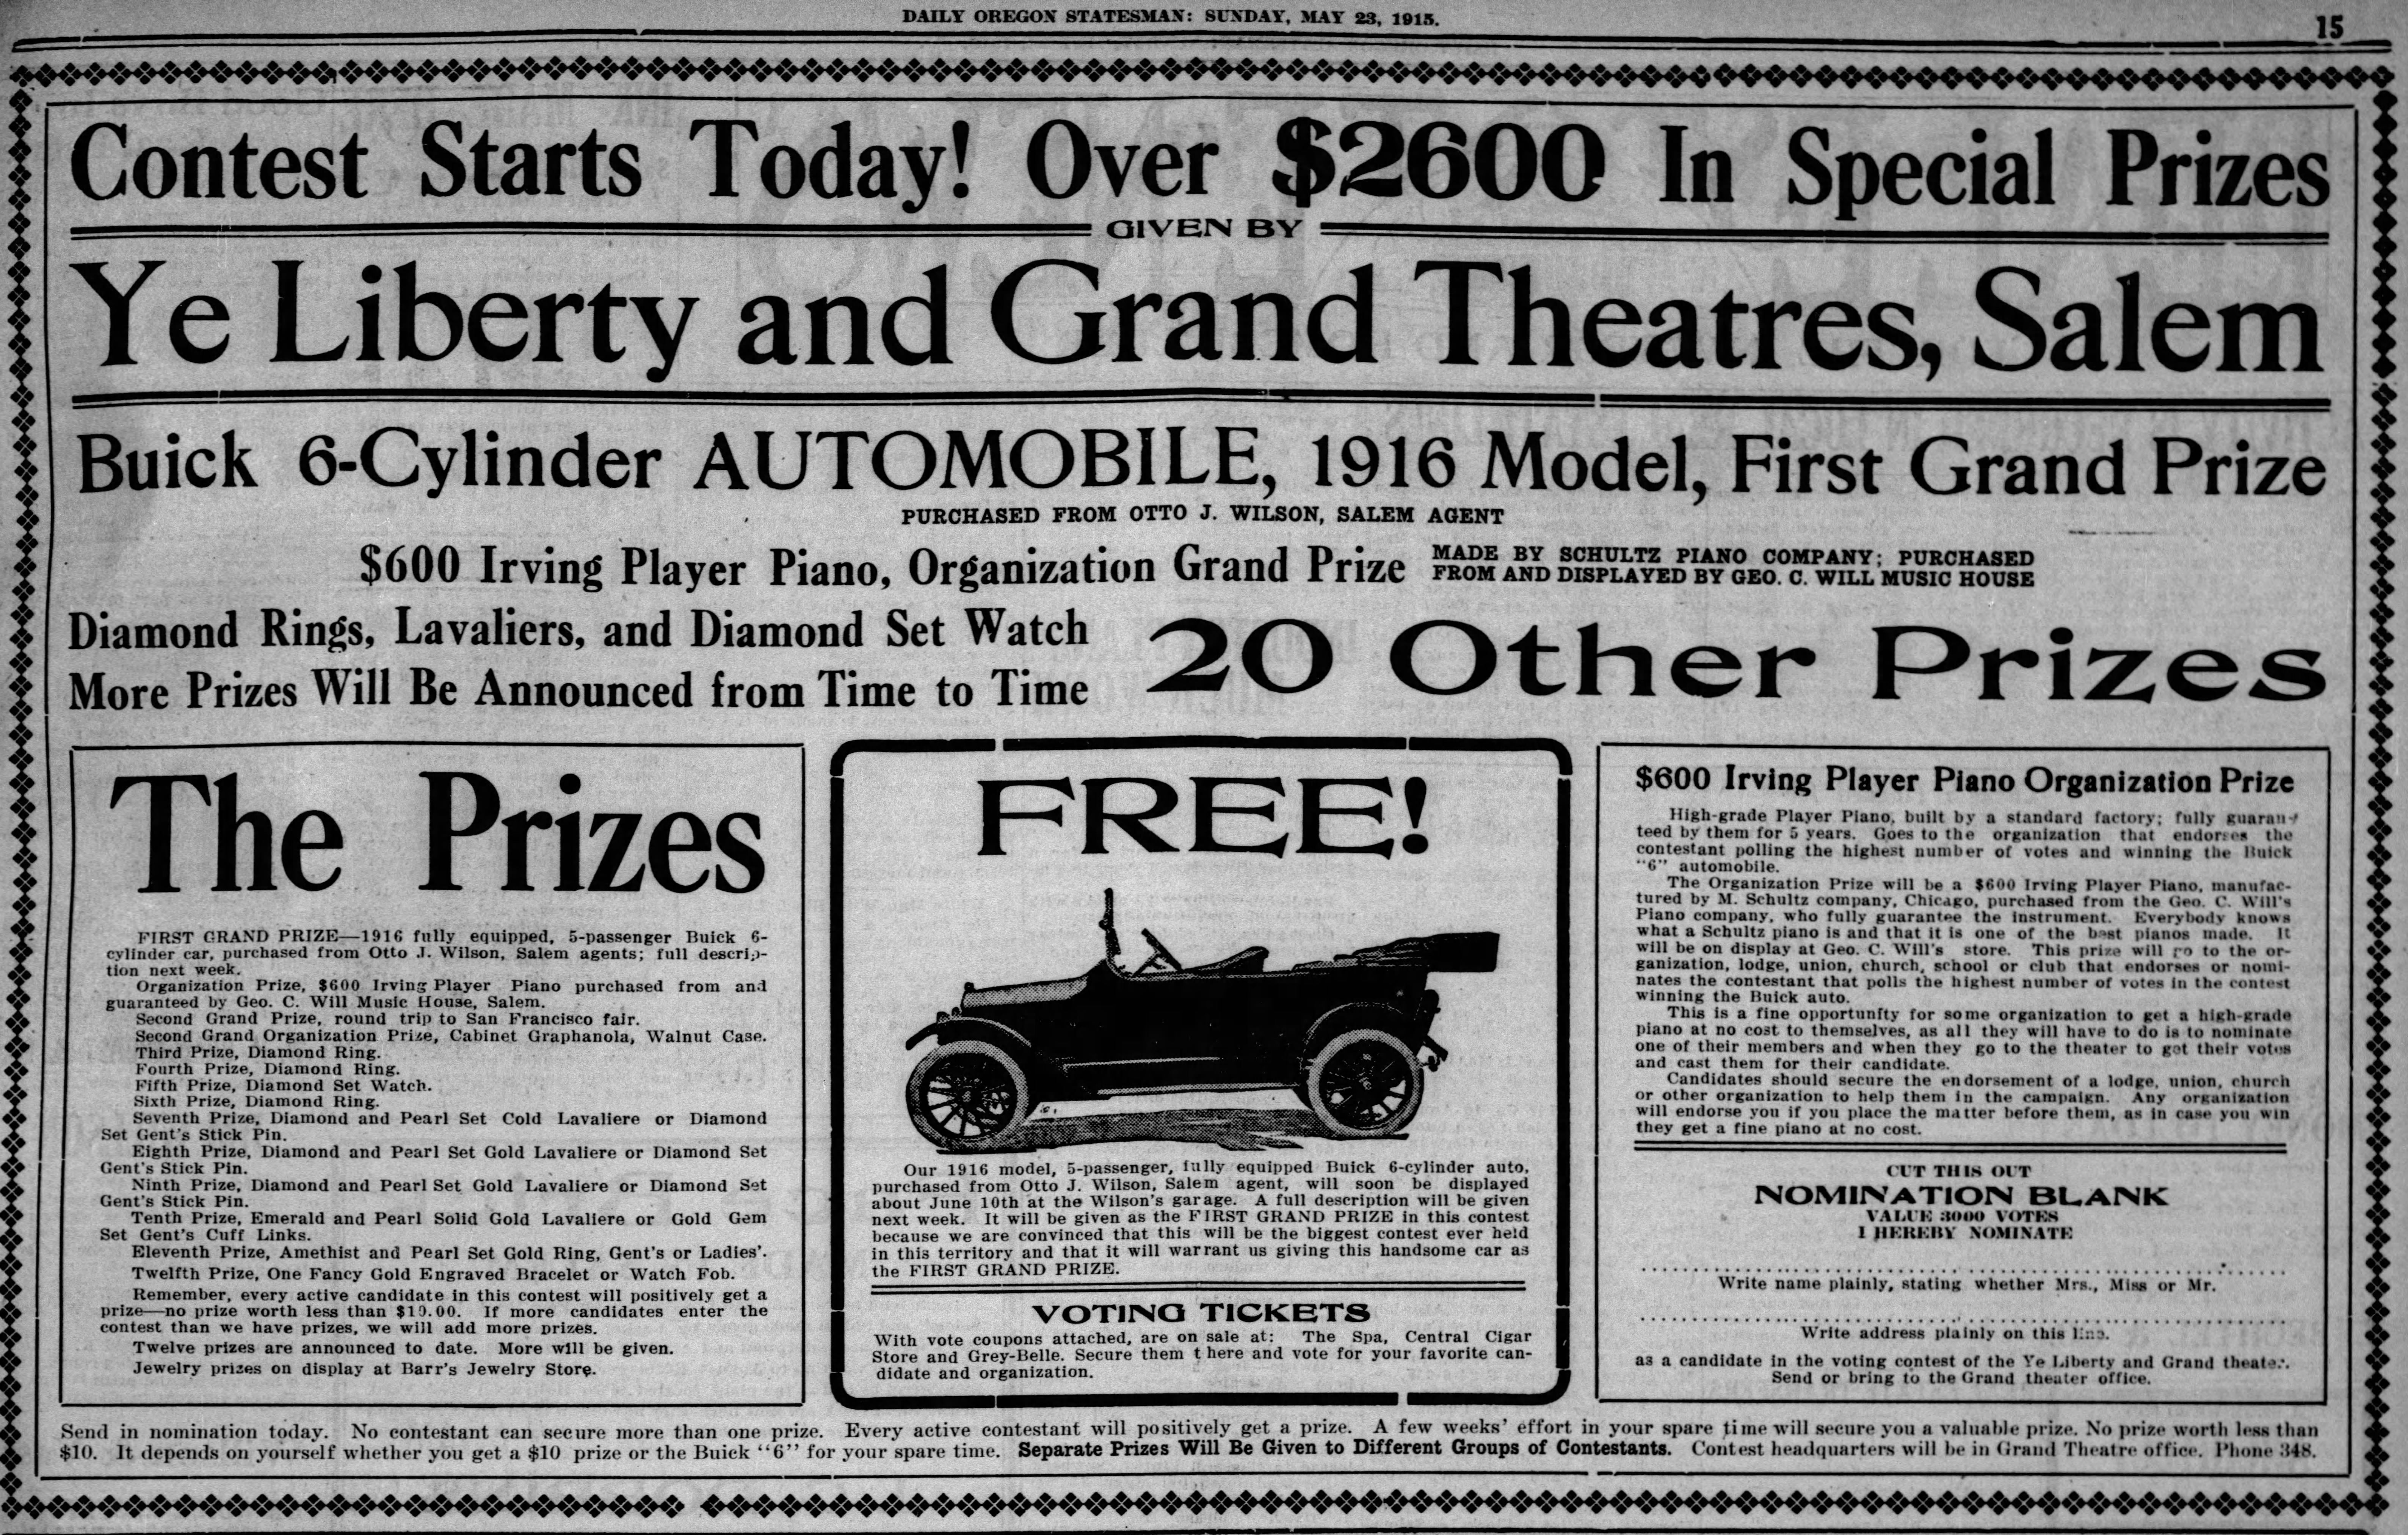 Car giveaway promotion scheme, 1915